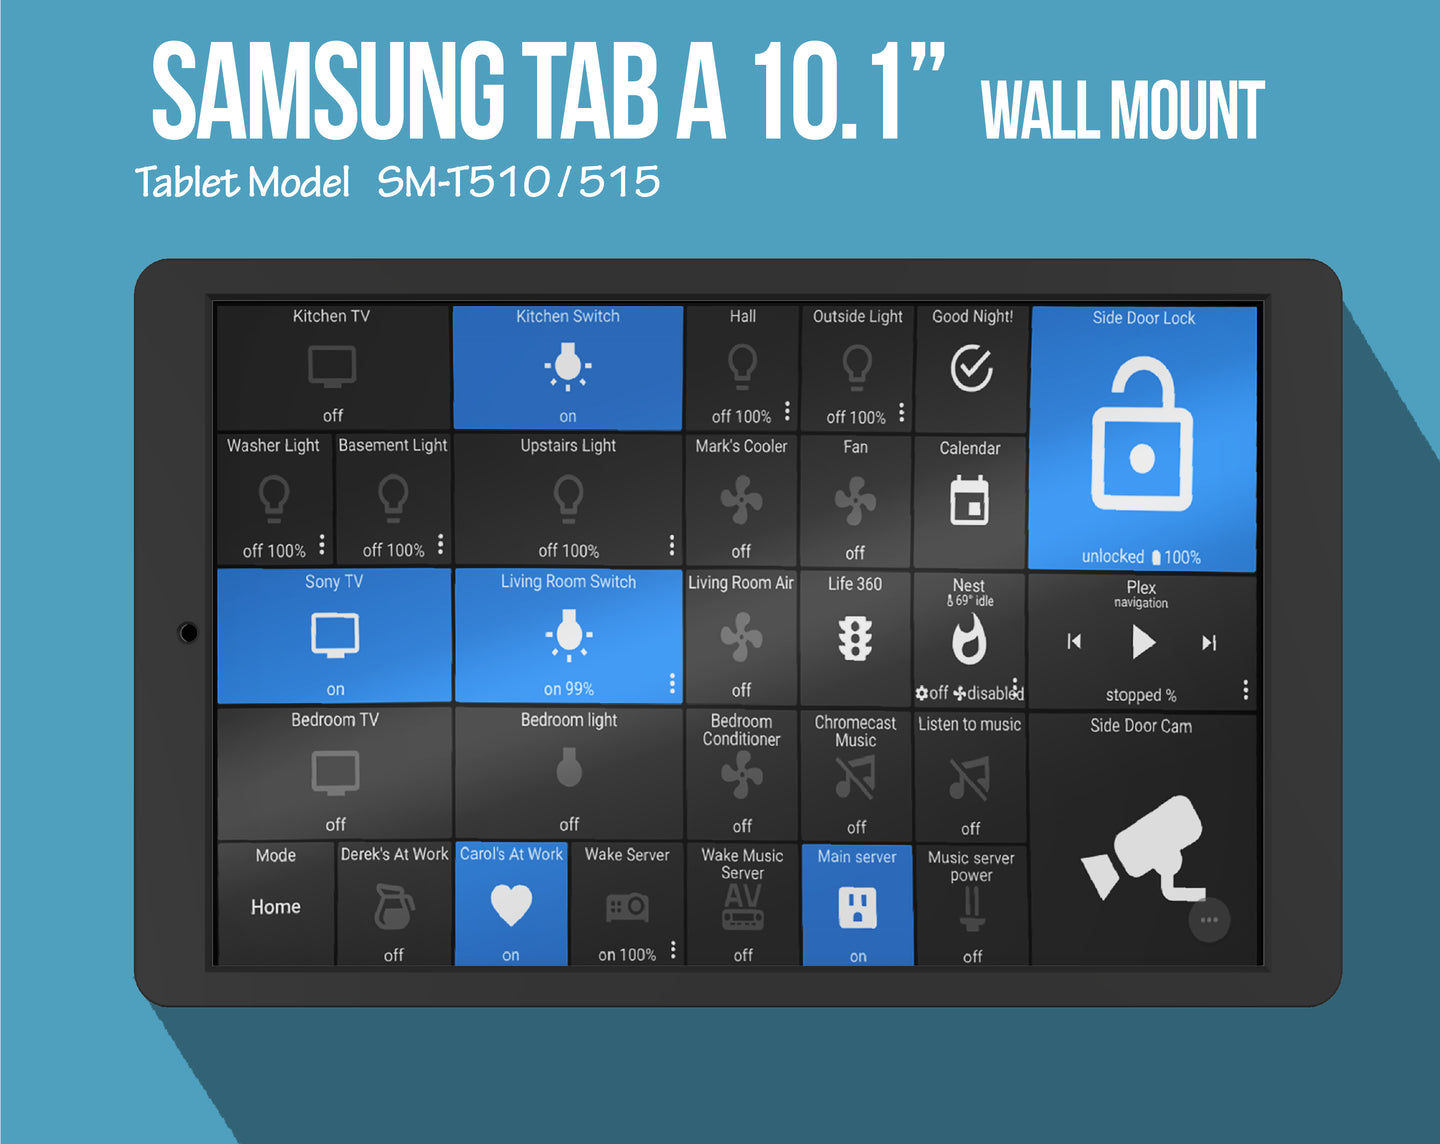 Samsung Tab A 10.1 Tablet ( SM-T510 / 515 ) Wall Mount – BLACK